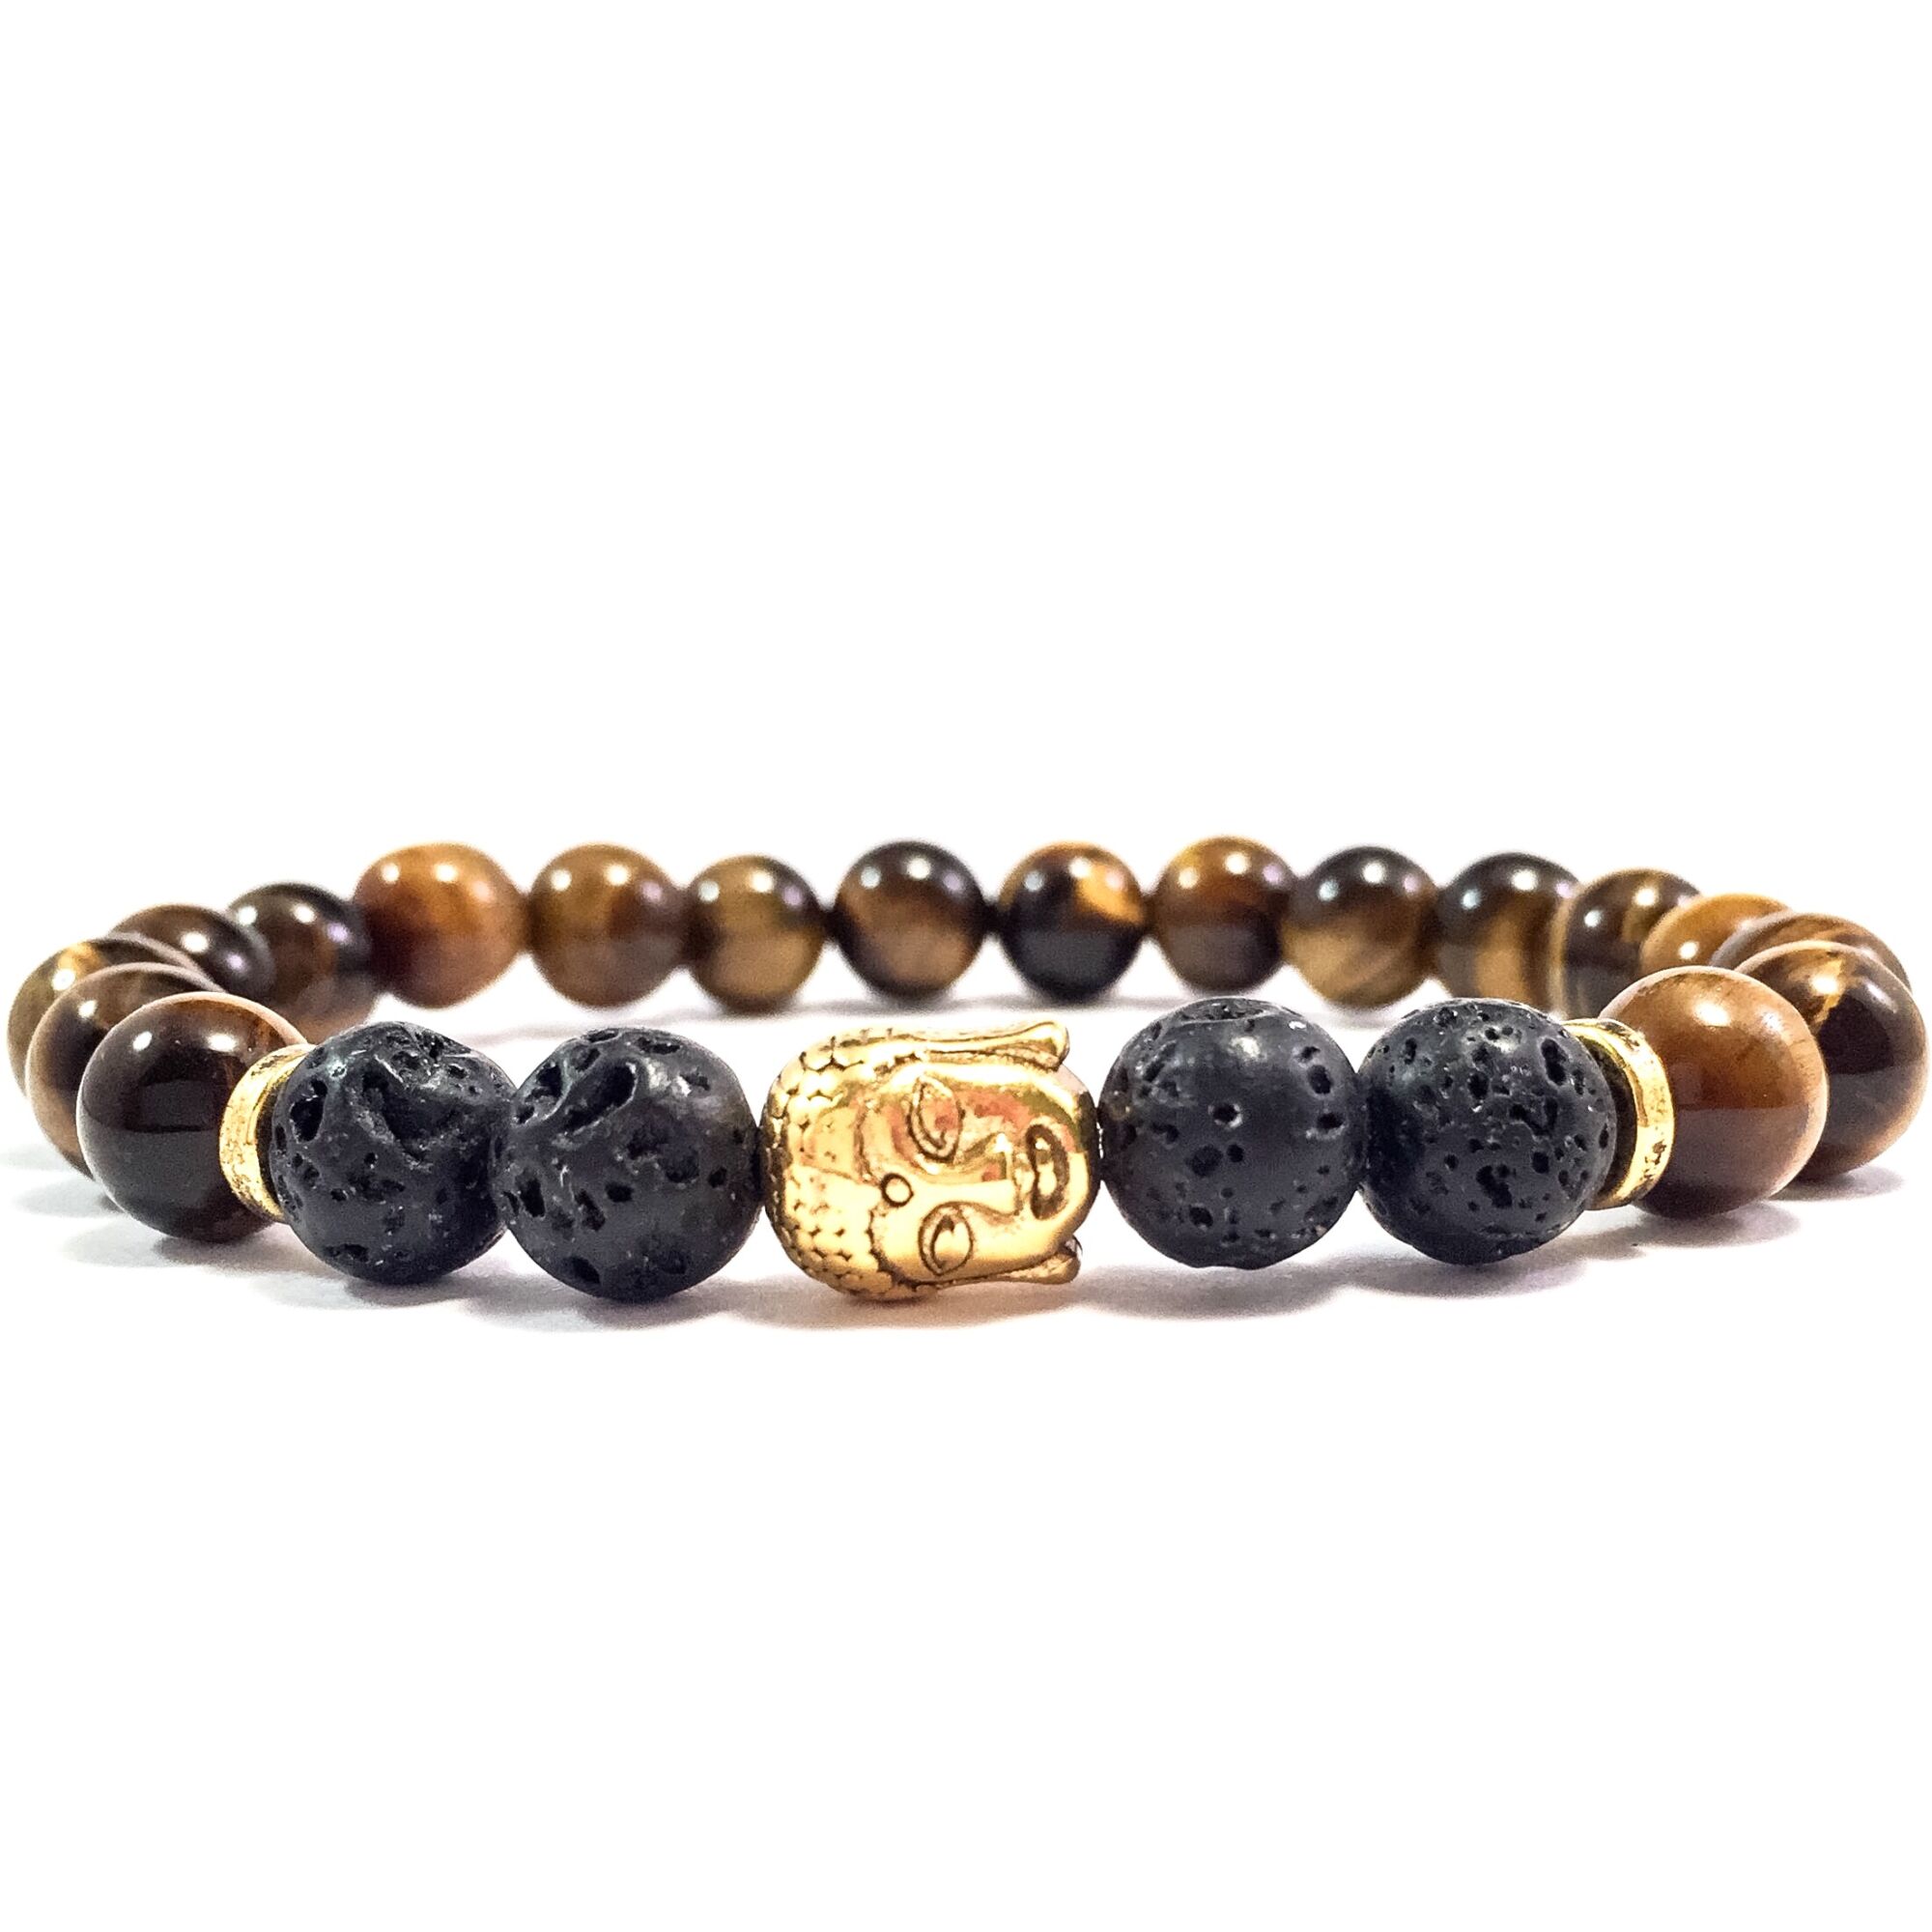 Tiger's eye and lava gold buddha bracelet